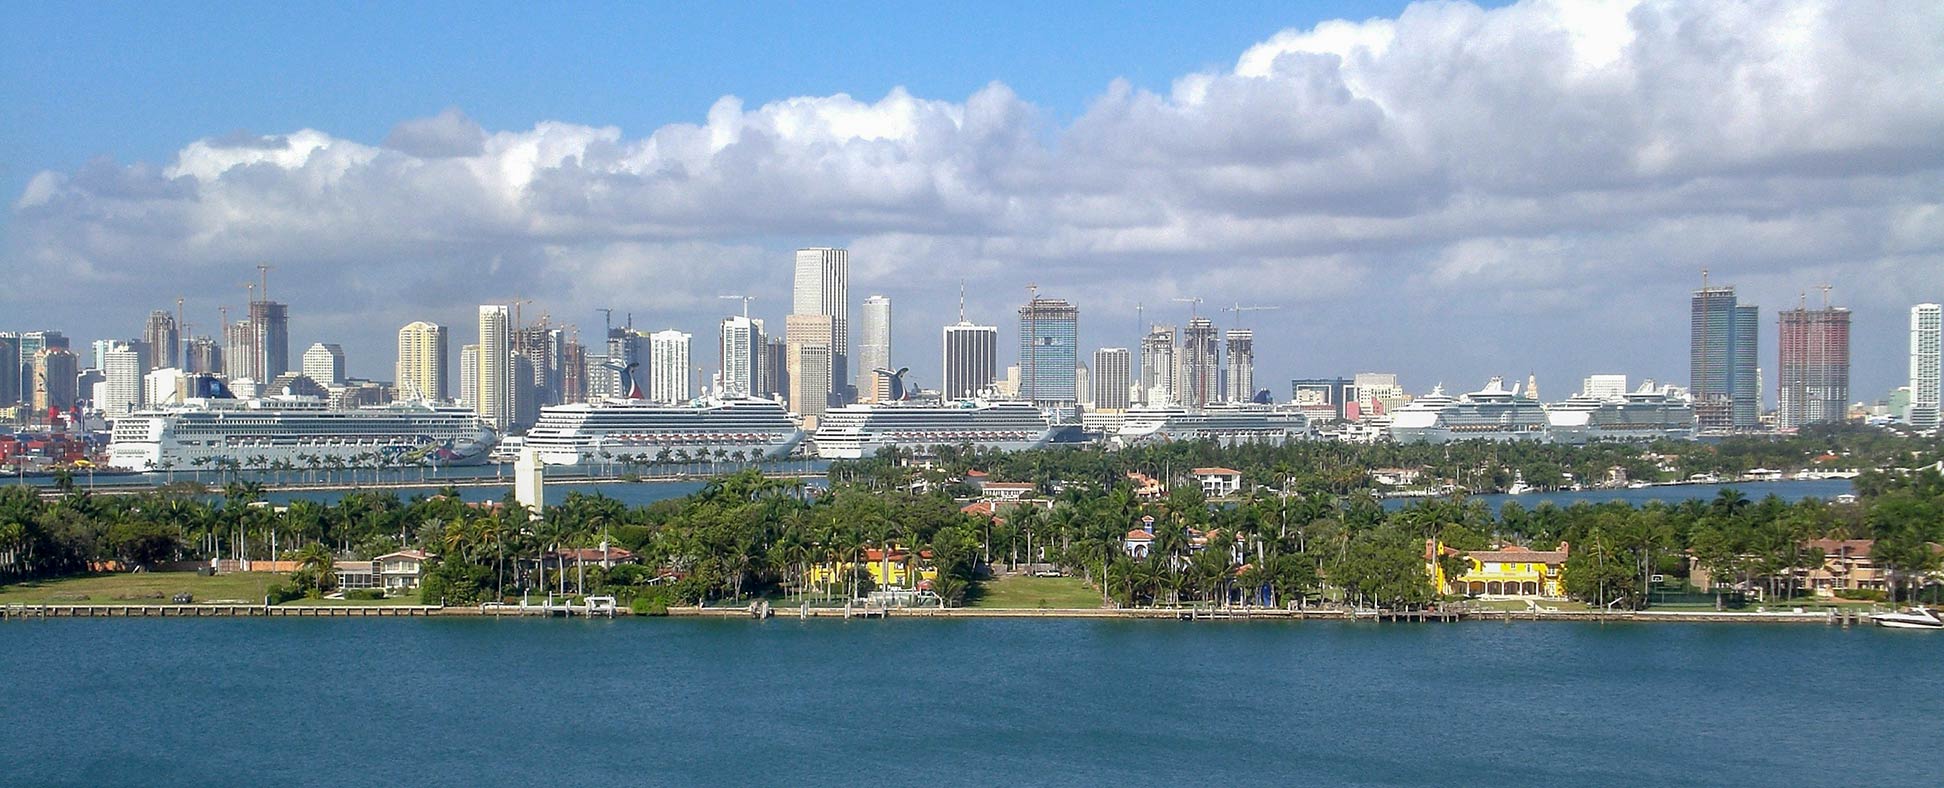 Panorama of downtown Miami with cruise terminal, seen from Miami Beach, Florida